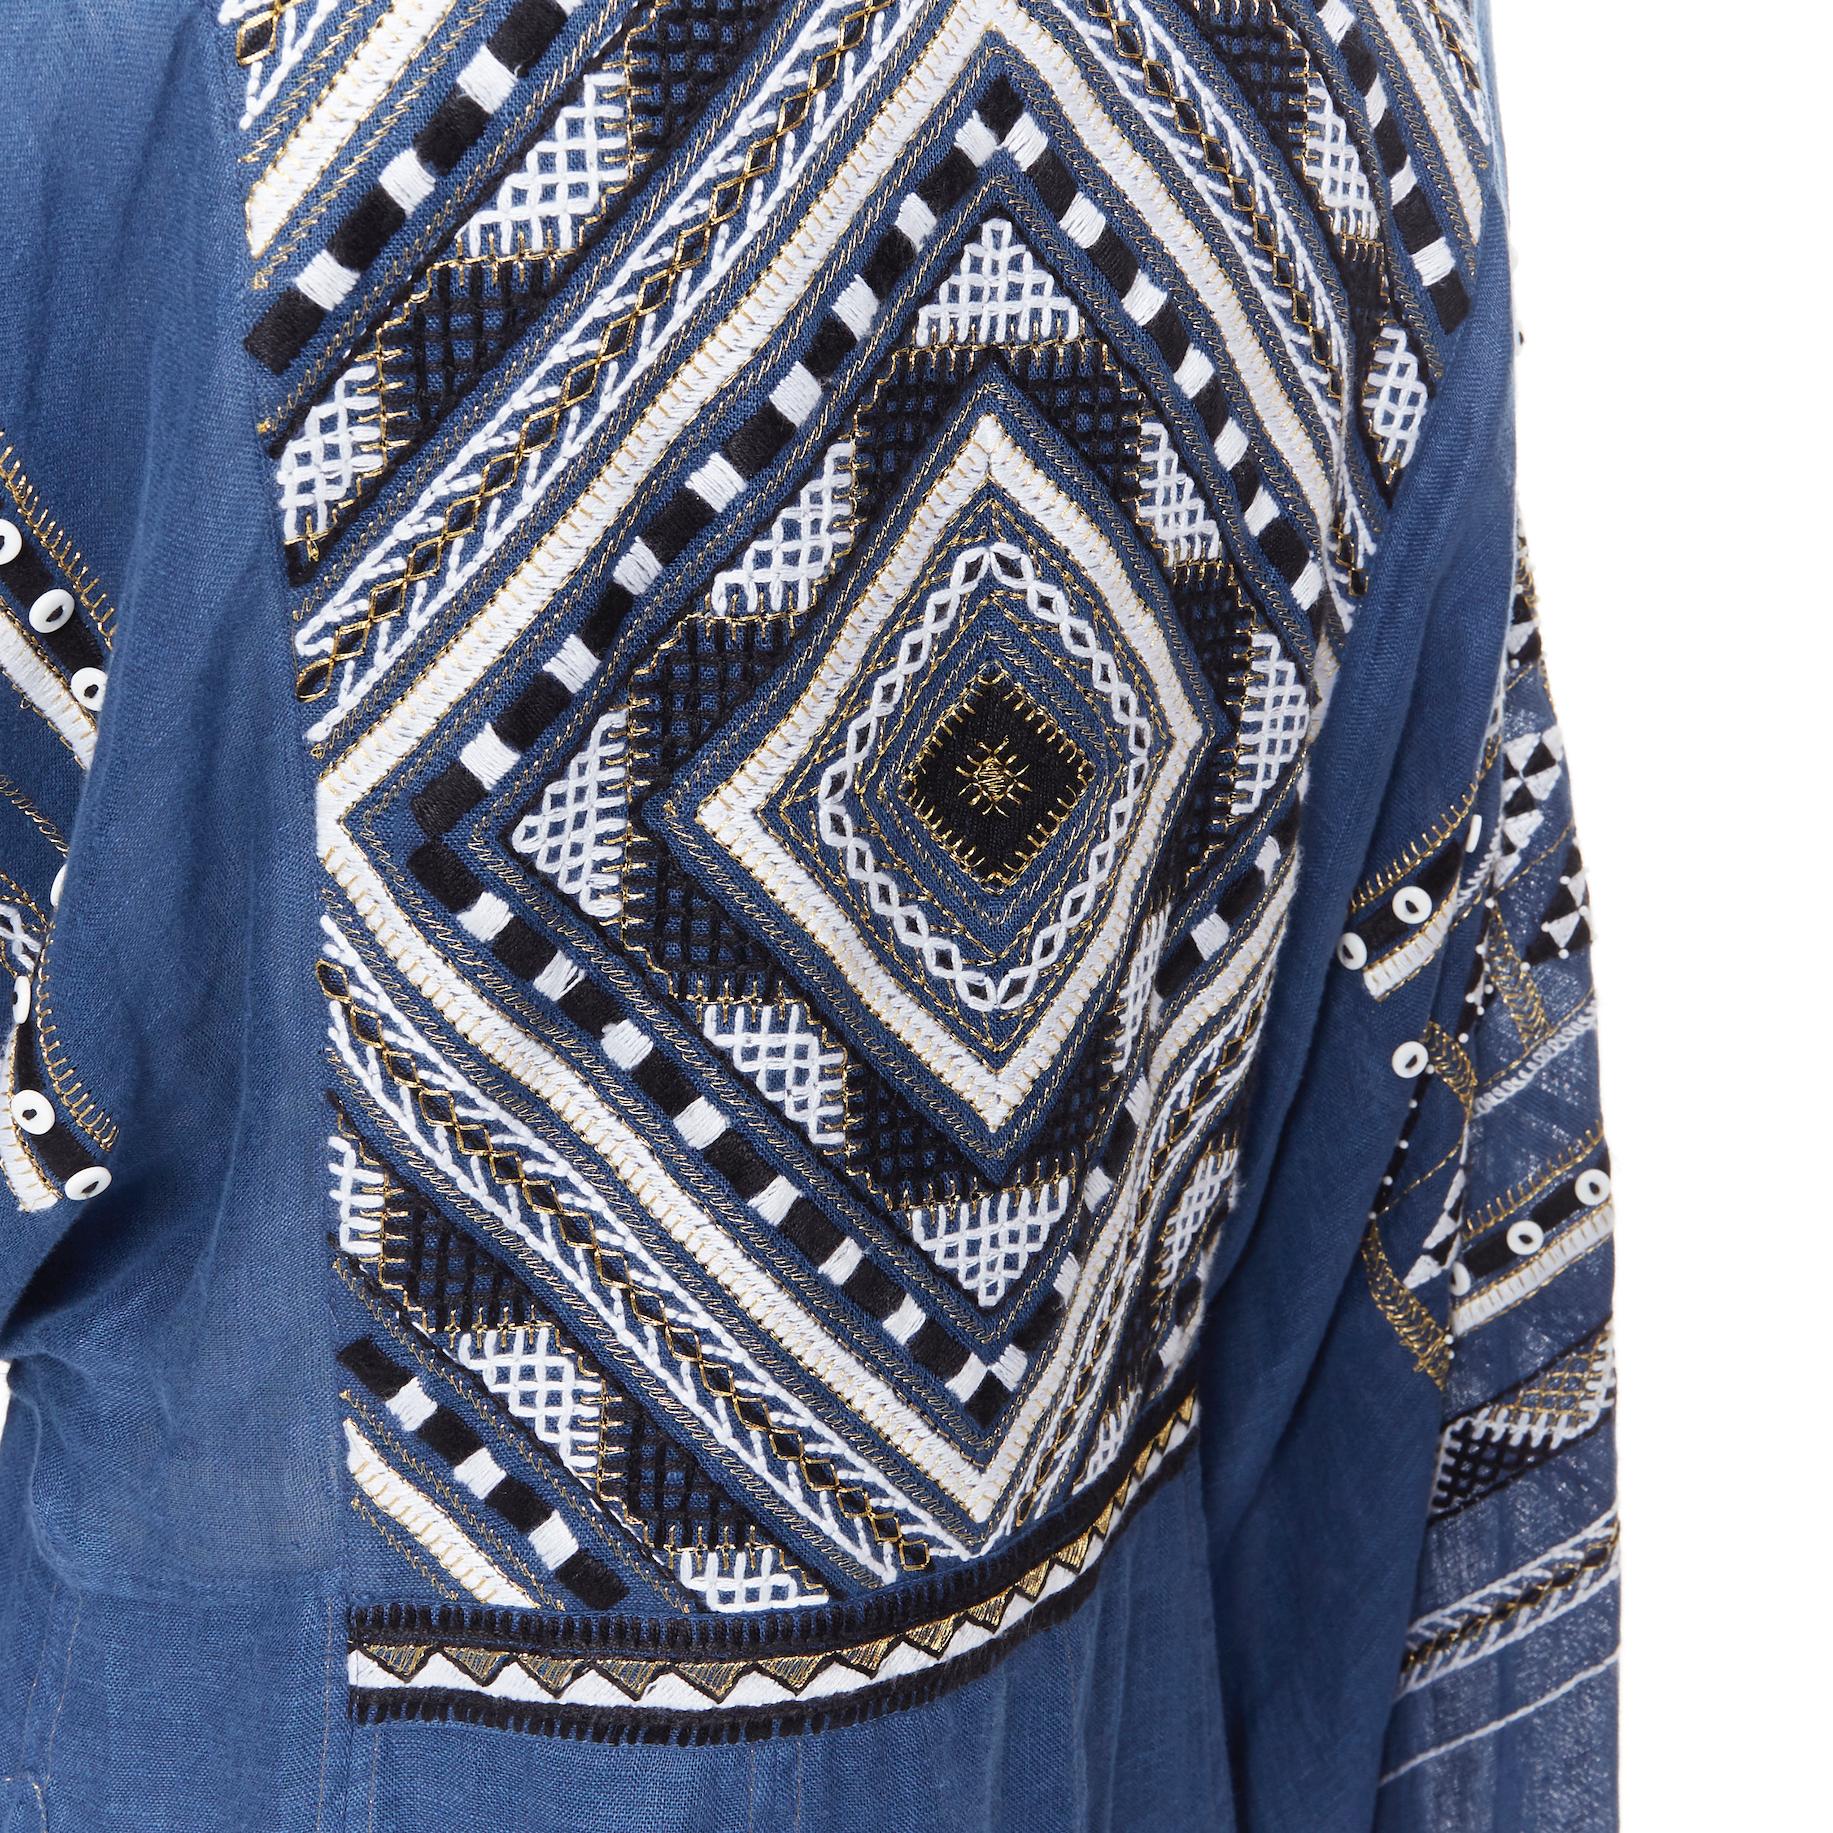 new VITA KIN blue Vyshyvanka embroidery bohemian folk wide sleeve mini dress S
Brand: Vita Kin
Designer: Vita Kin
Collection: SS19
Model Name / Style: Bohemian dress
Material: Linen
Color: Blue
Pattern: Geometric
Extra Detail: Plunge V-neckline.